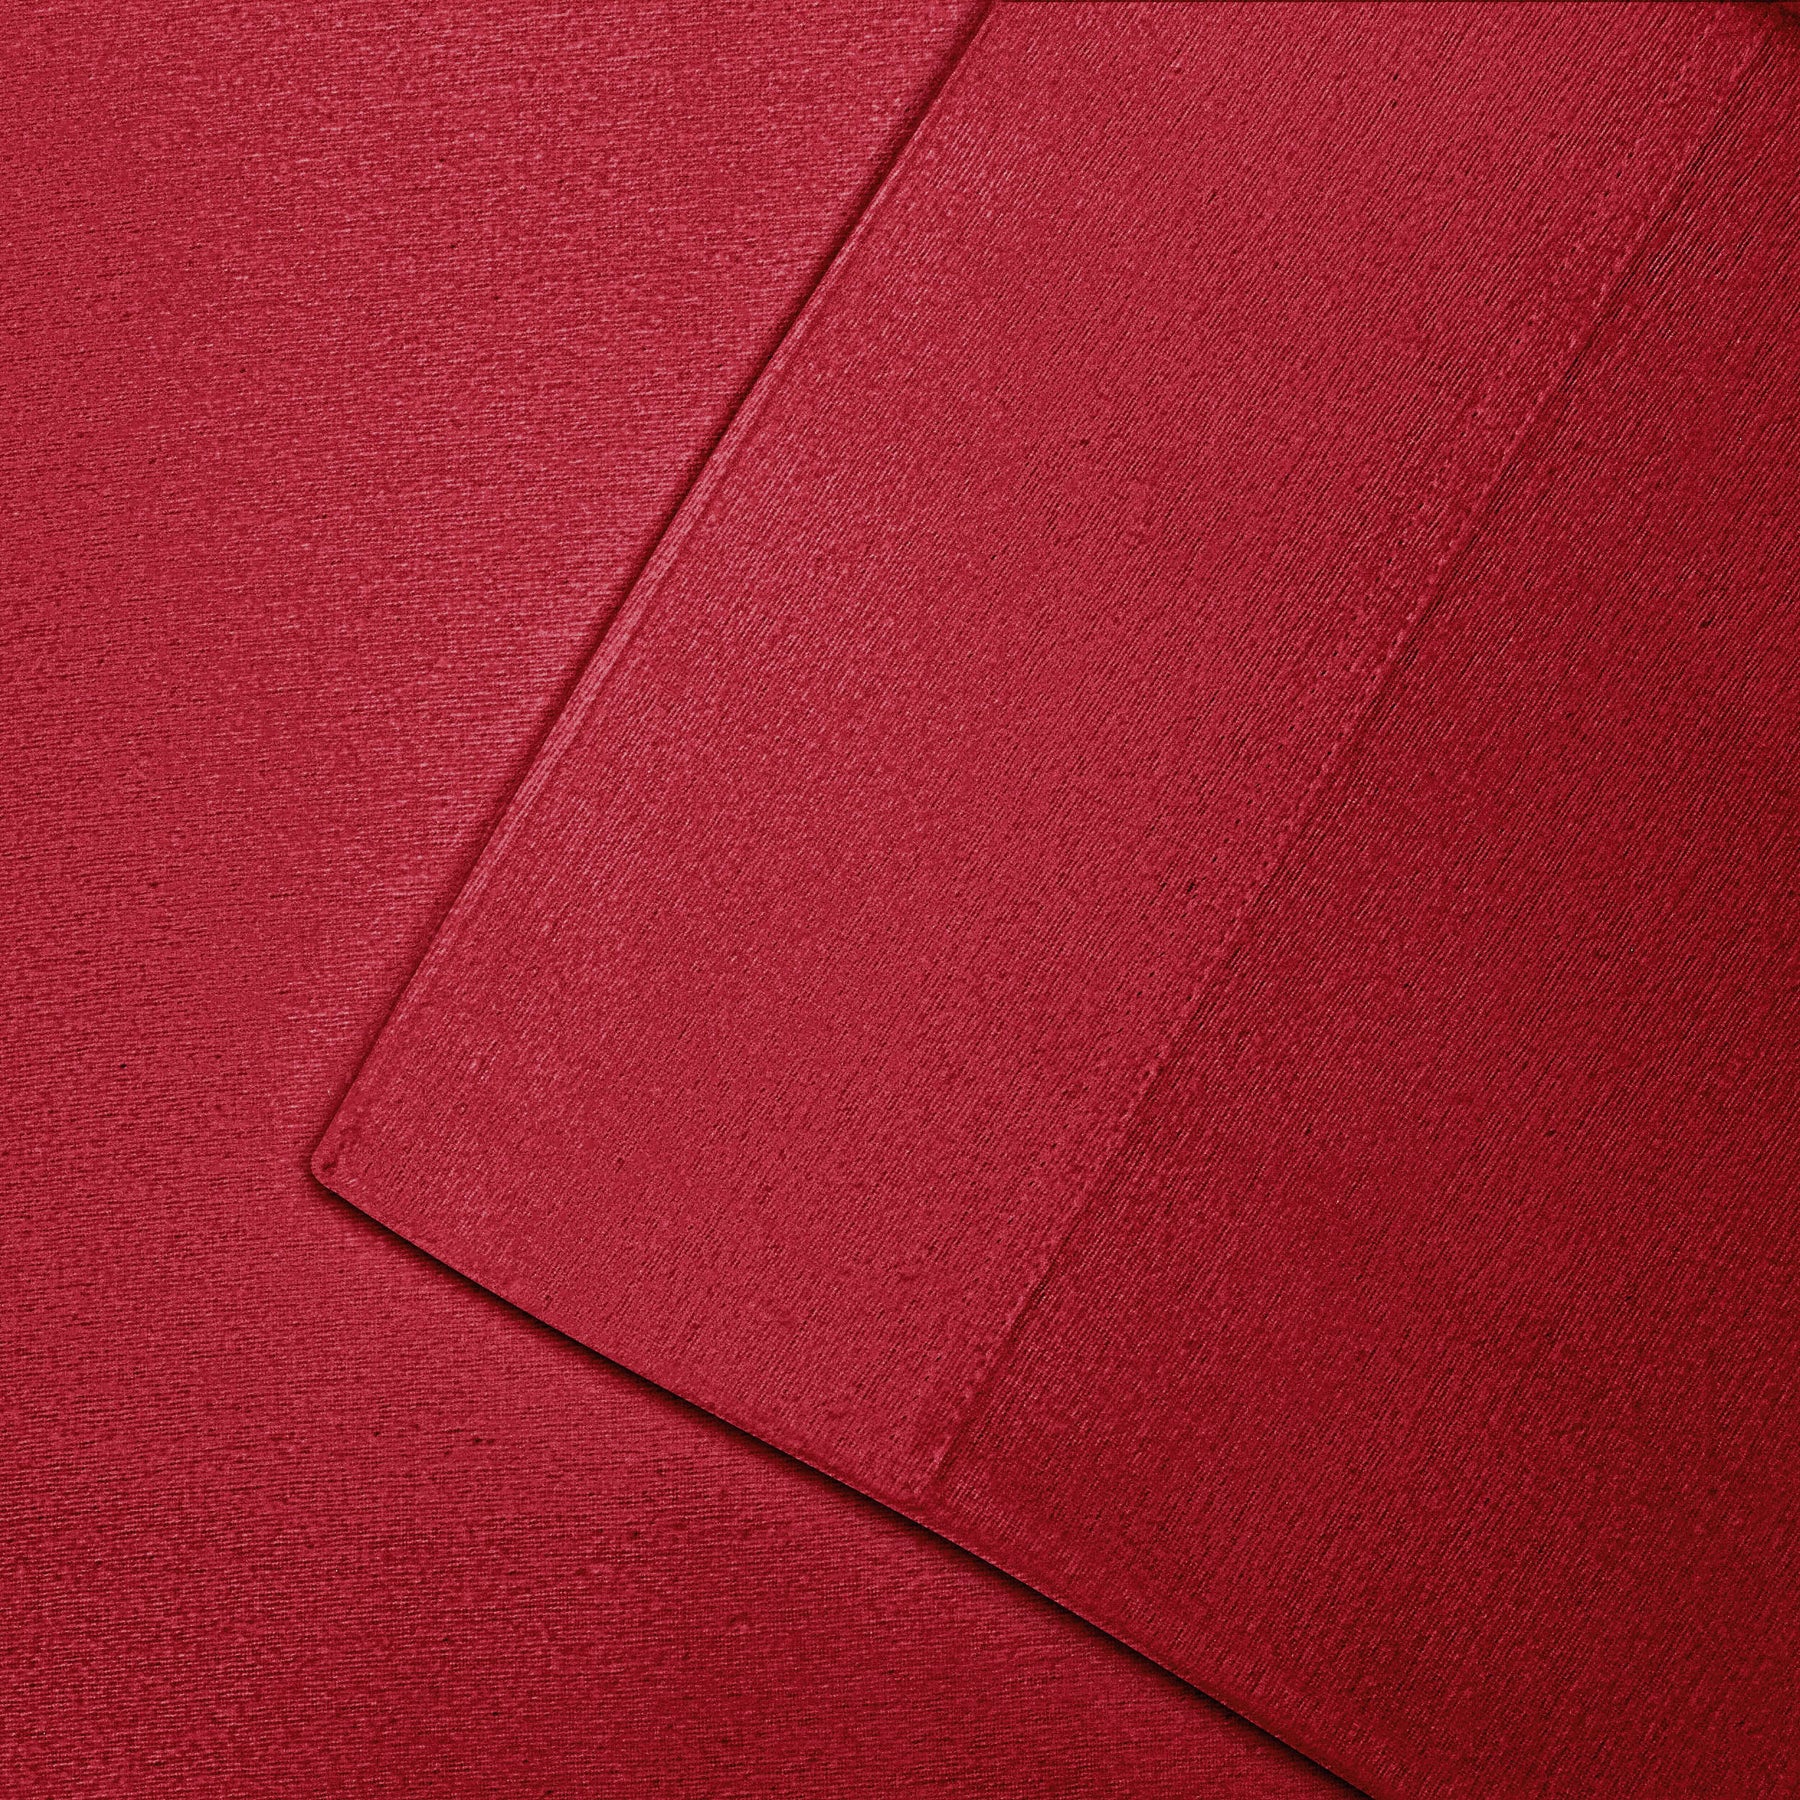 Solid Flannel Cotton Soft Warm Deep Pocket Sheet Set - Burgundy